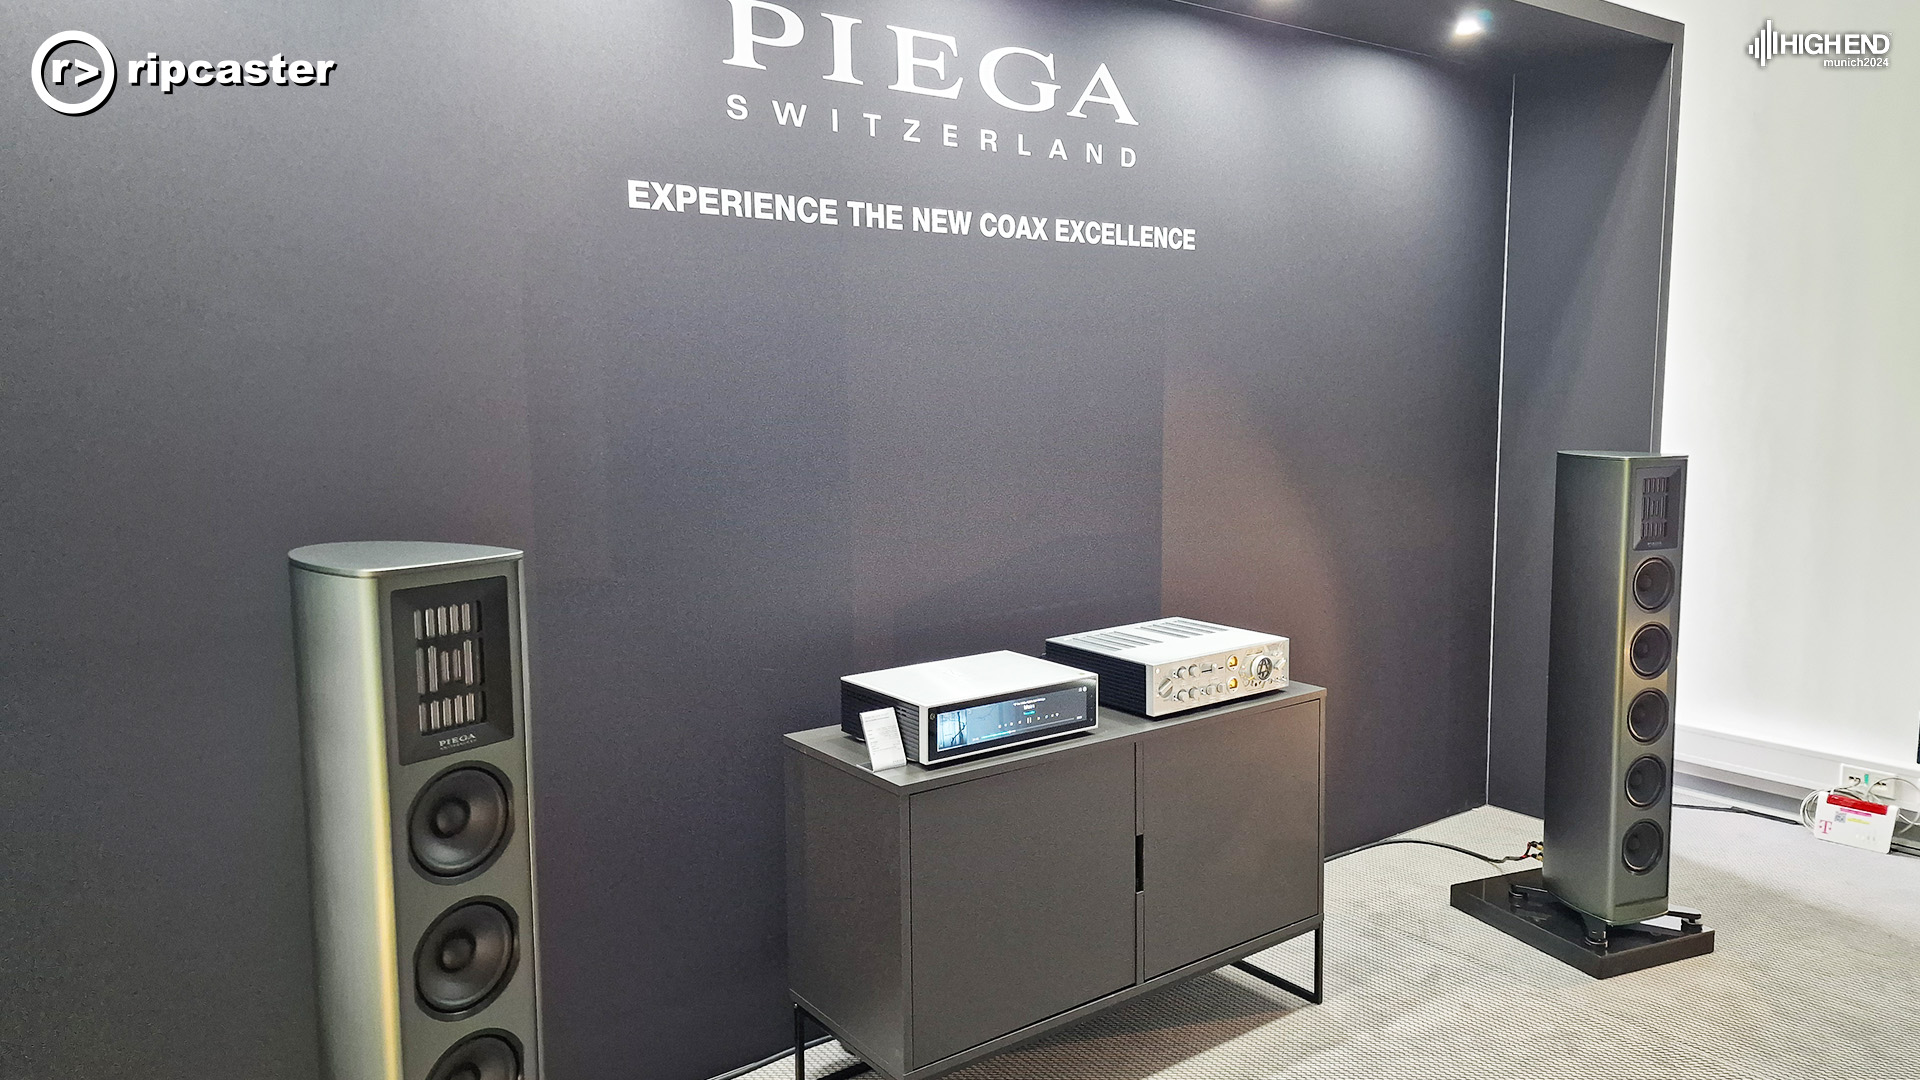 Piega floorstanding speakers in grey with HiFi Rose equipment between them.